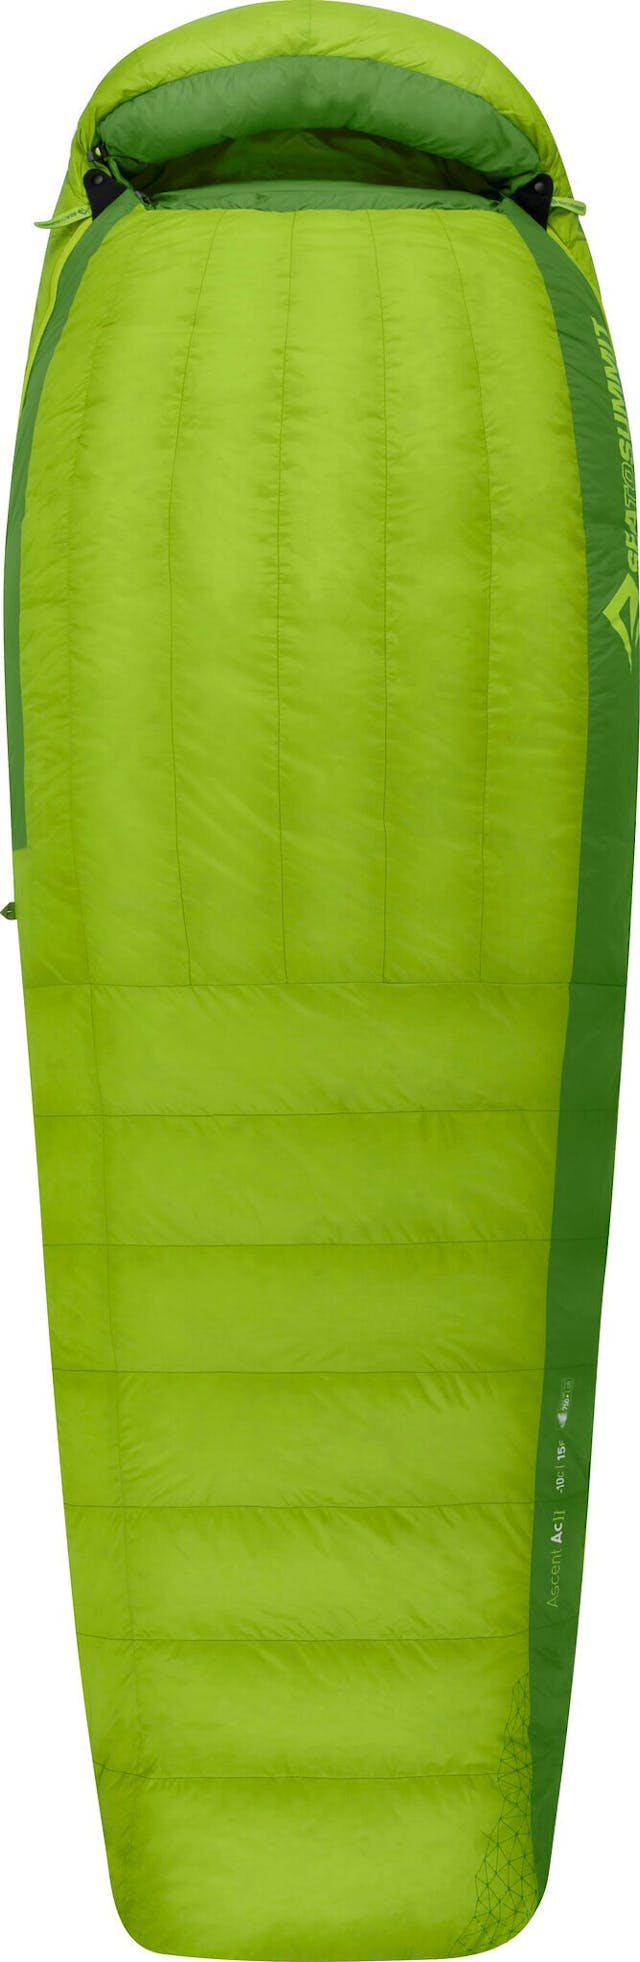 Product image for Ascent AcII Regular Down Sleeping Bag 15°F / -10°C